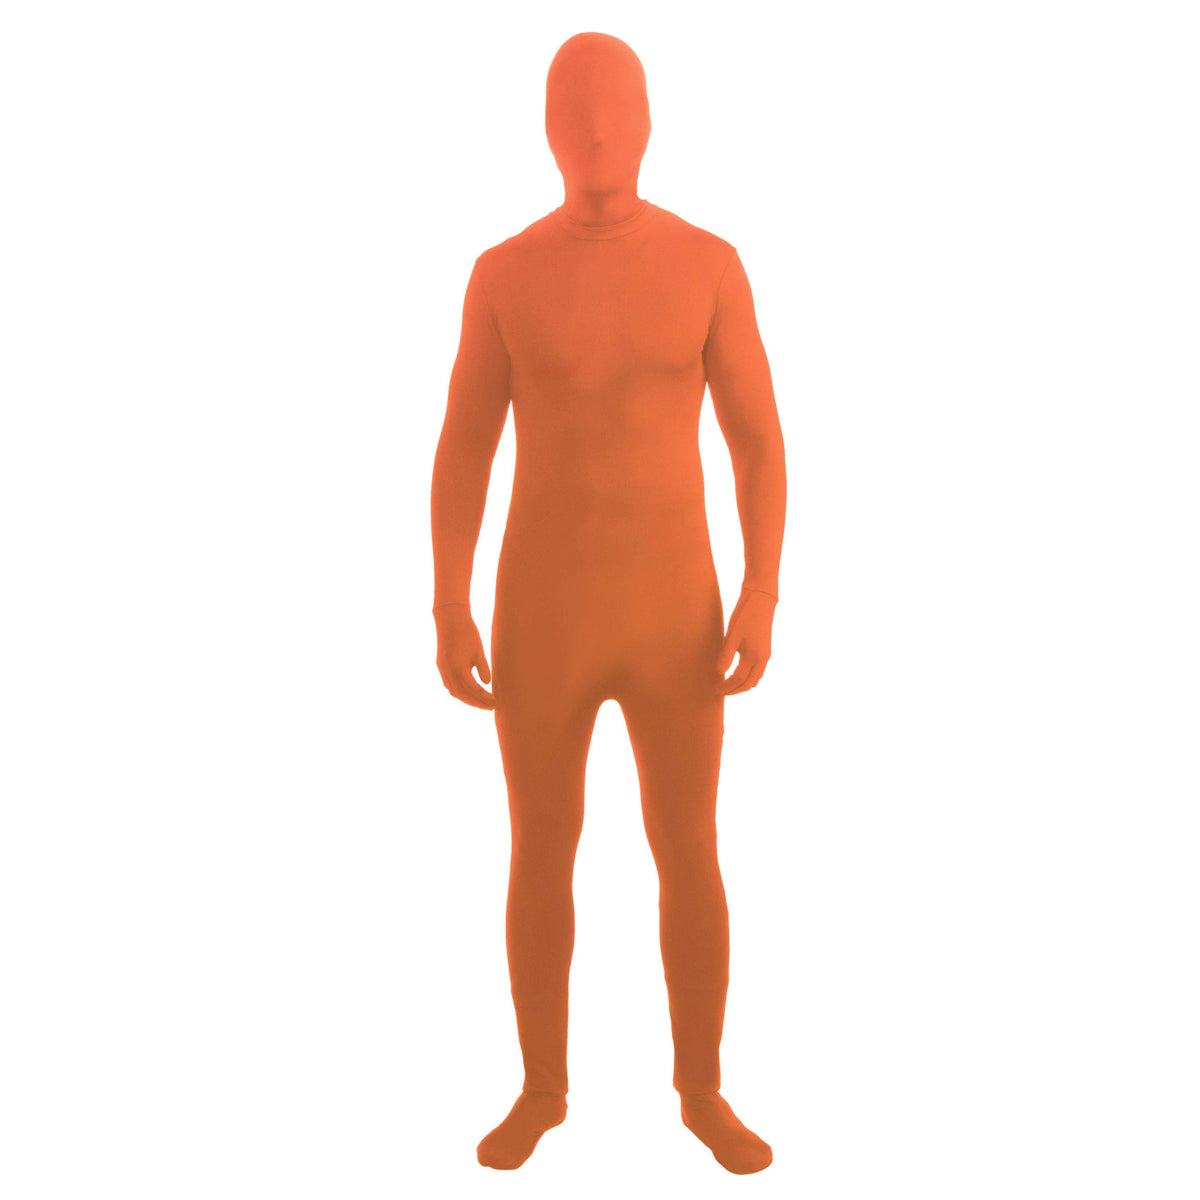 Neon Orange Disappearing Man Adult Costume